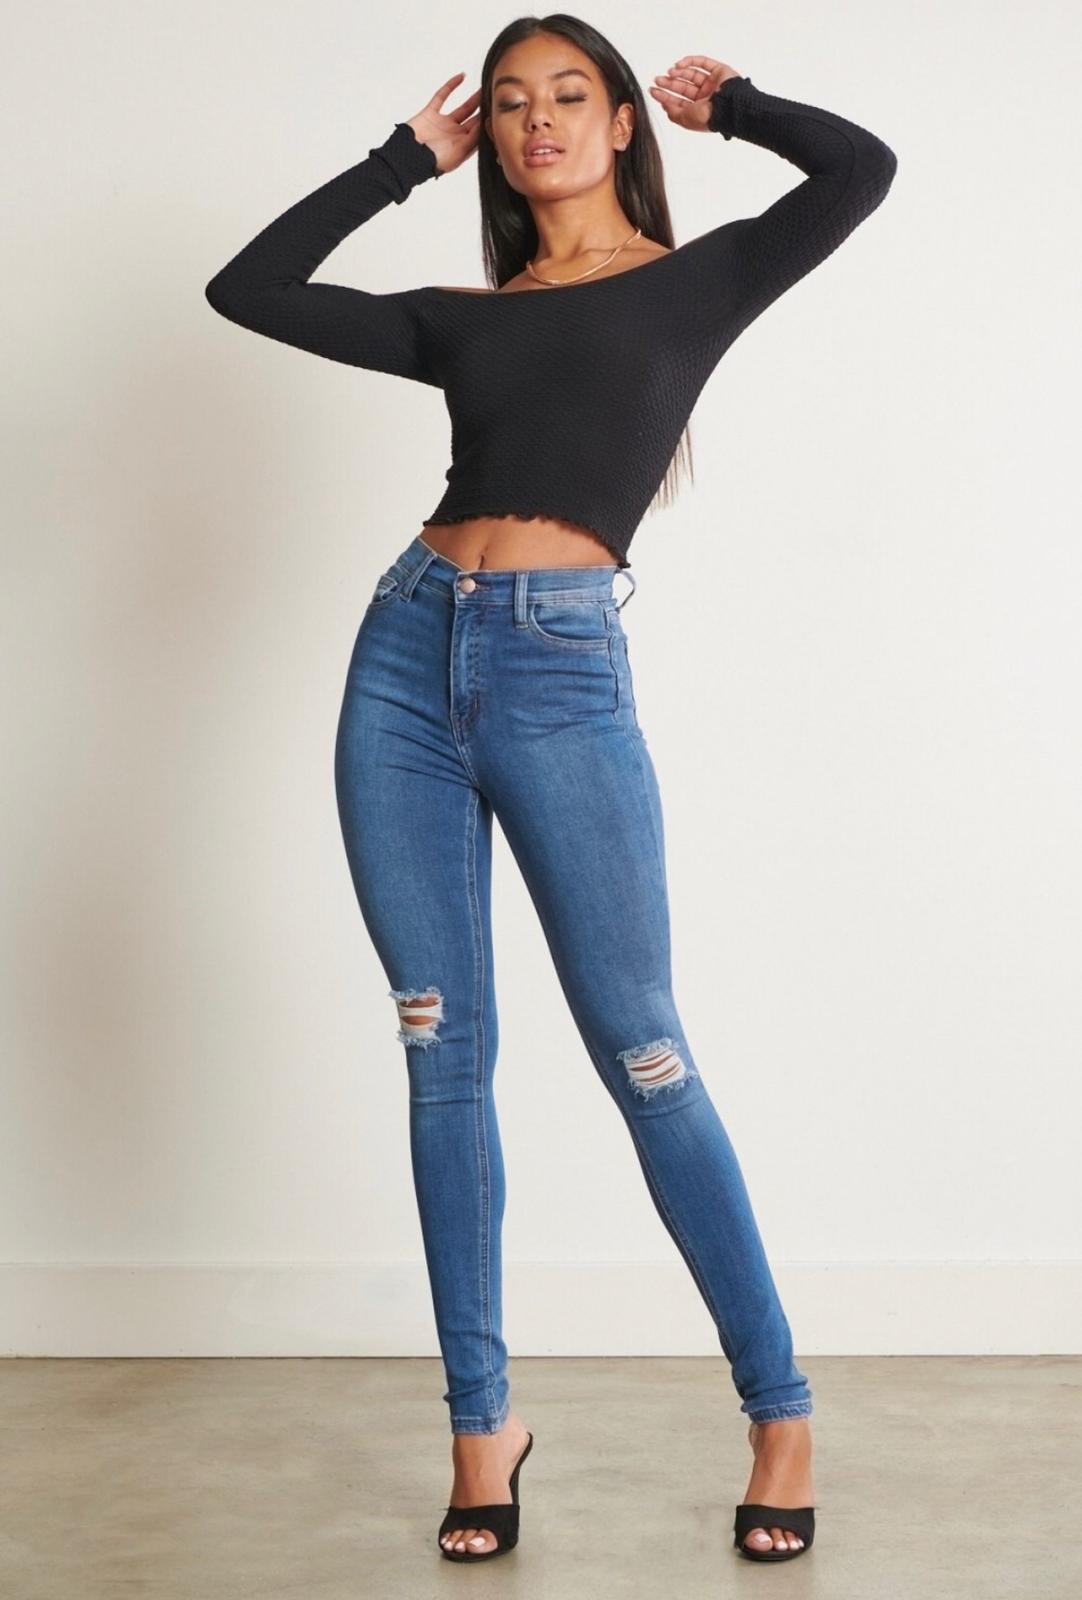 Vibrant jeans